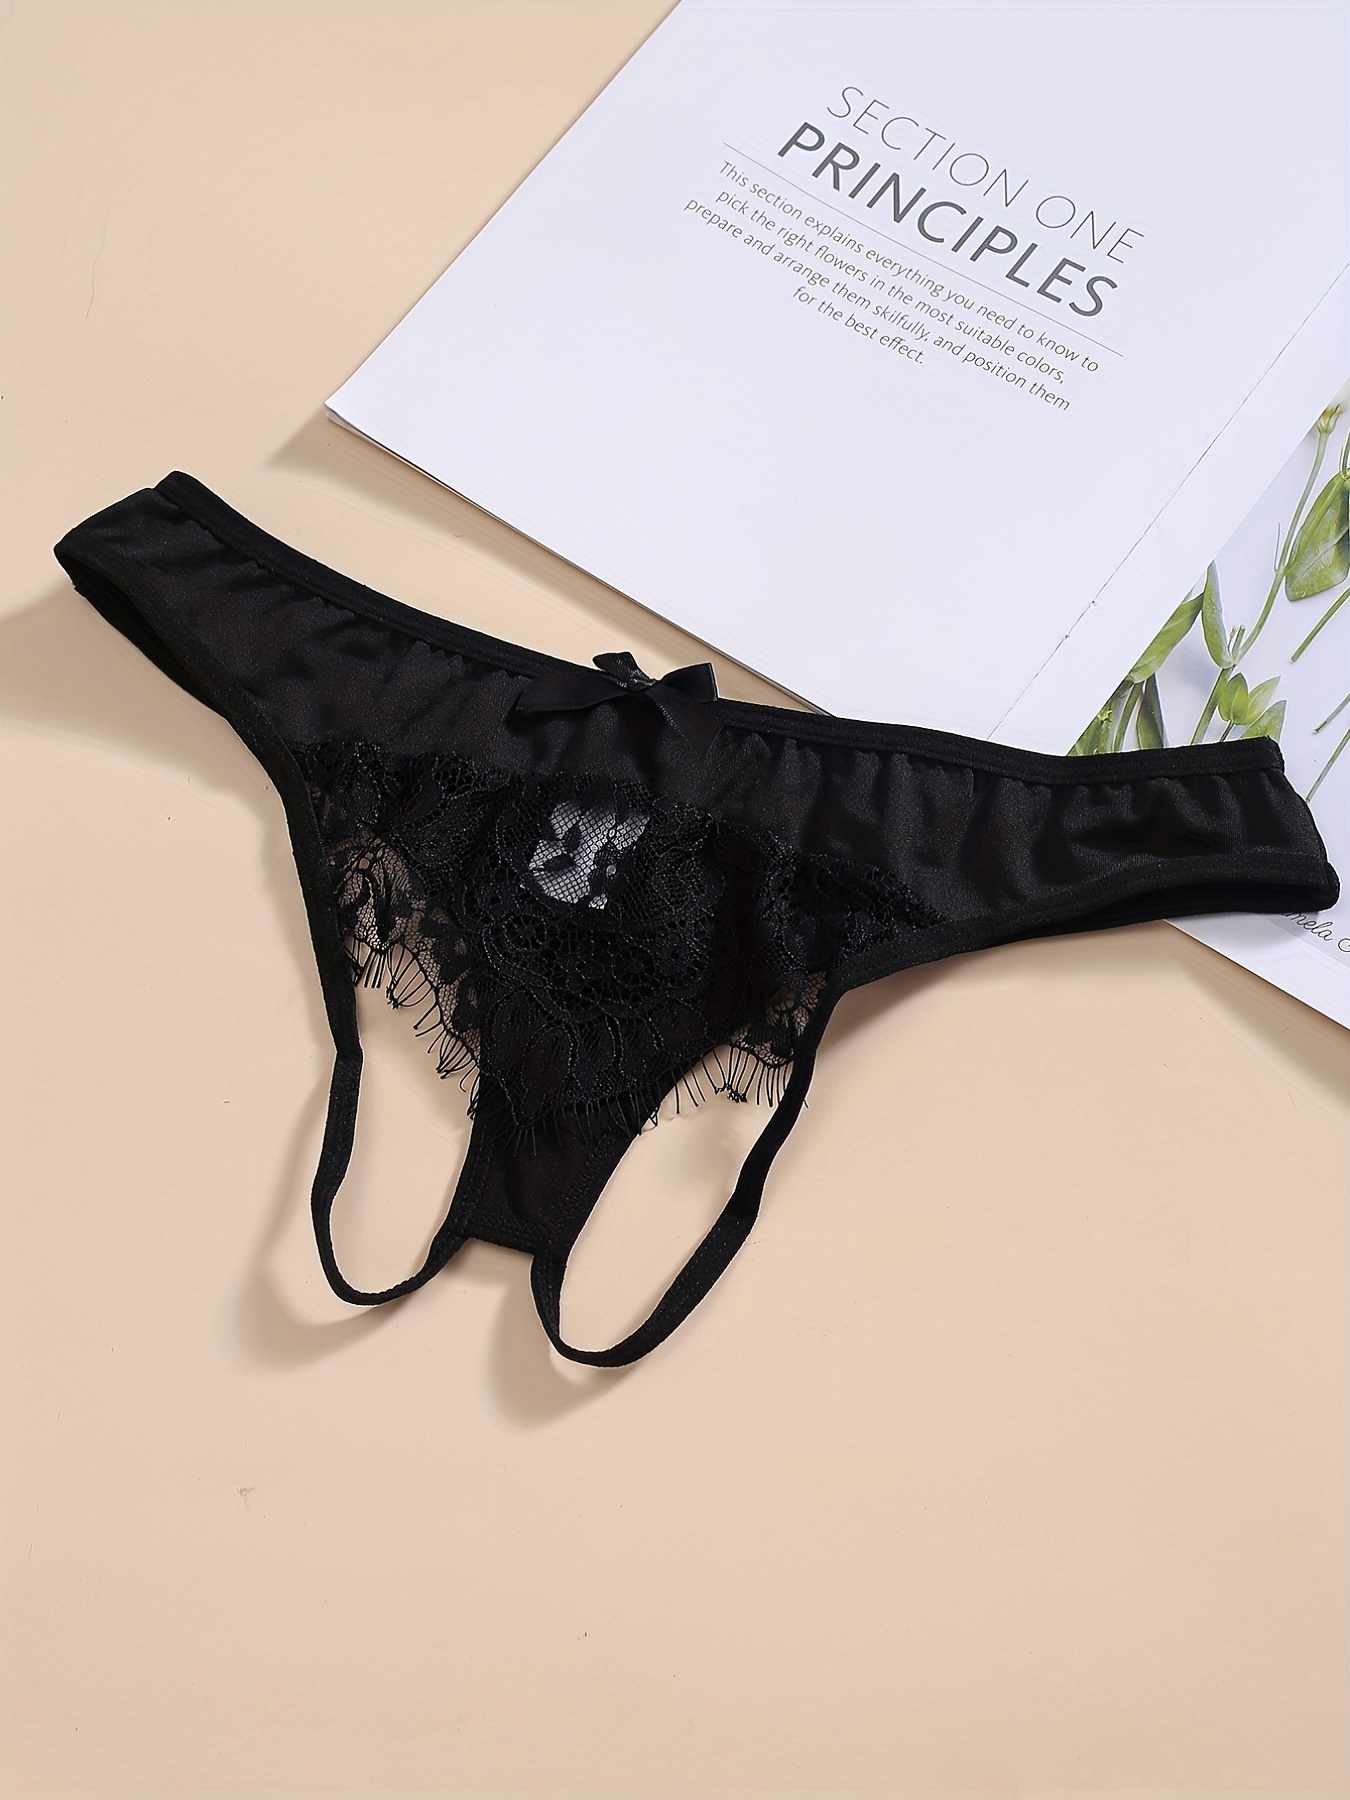 Briefs Panties Women Sexy Lingerie Erotic Open Crotch Panties Lace